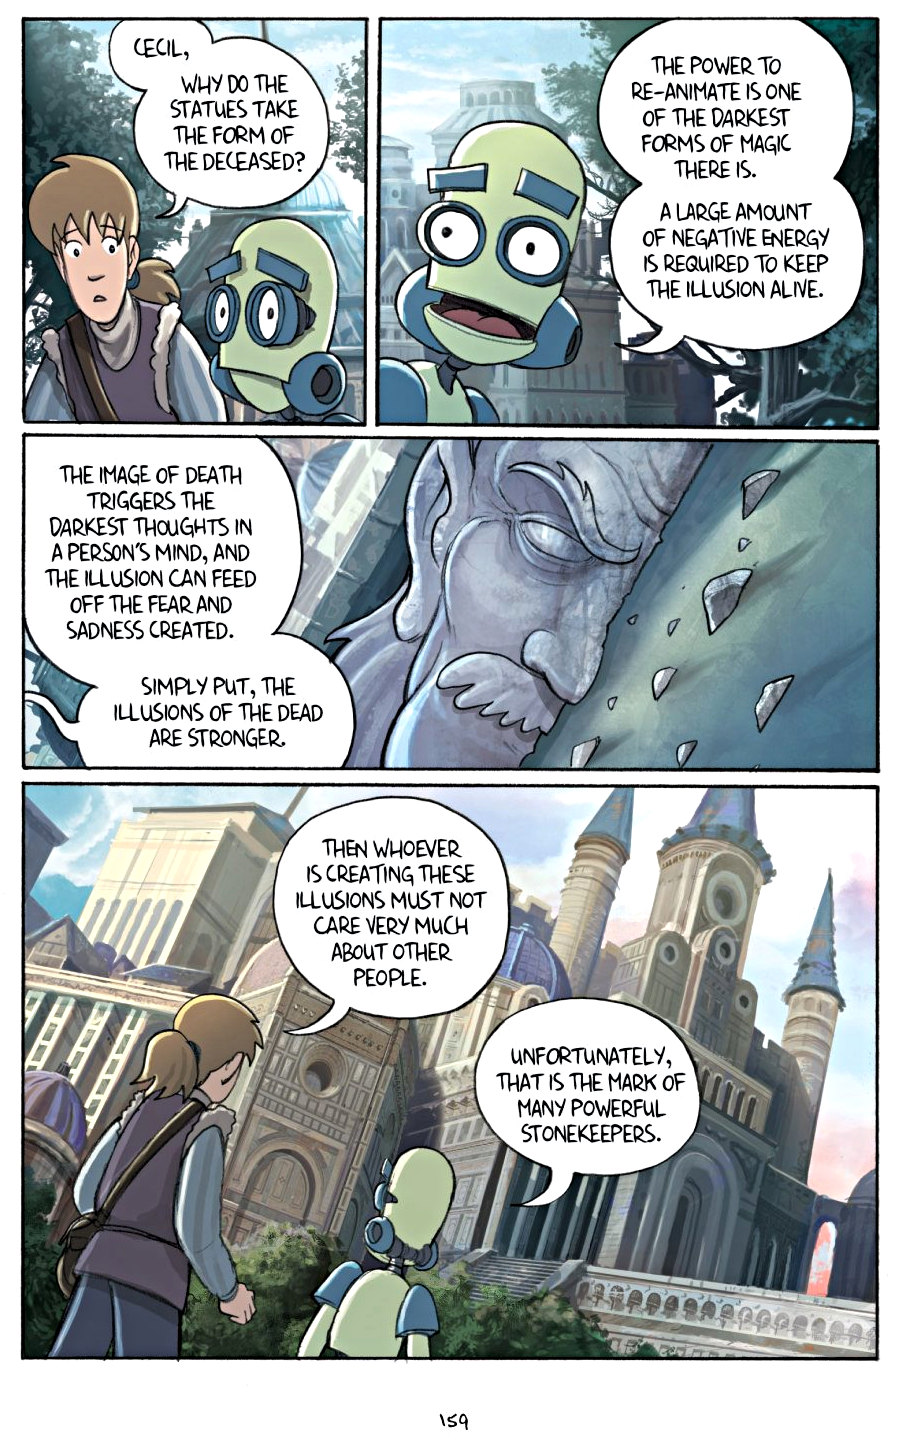 page 159 of amulet 4 last council graphic novel by kazu kibuishi